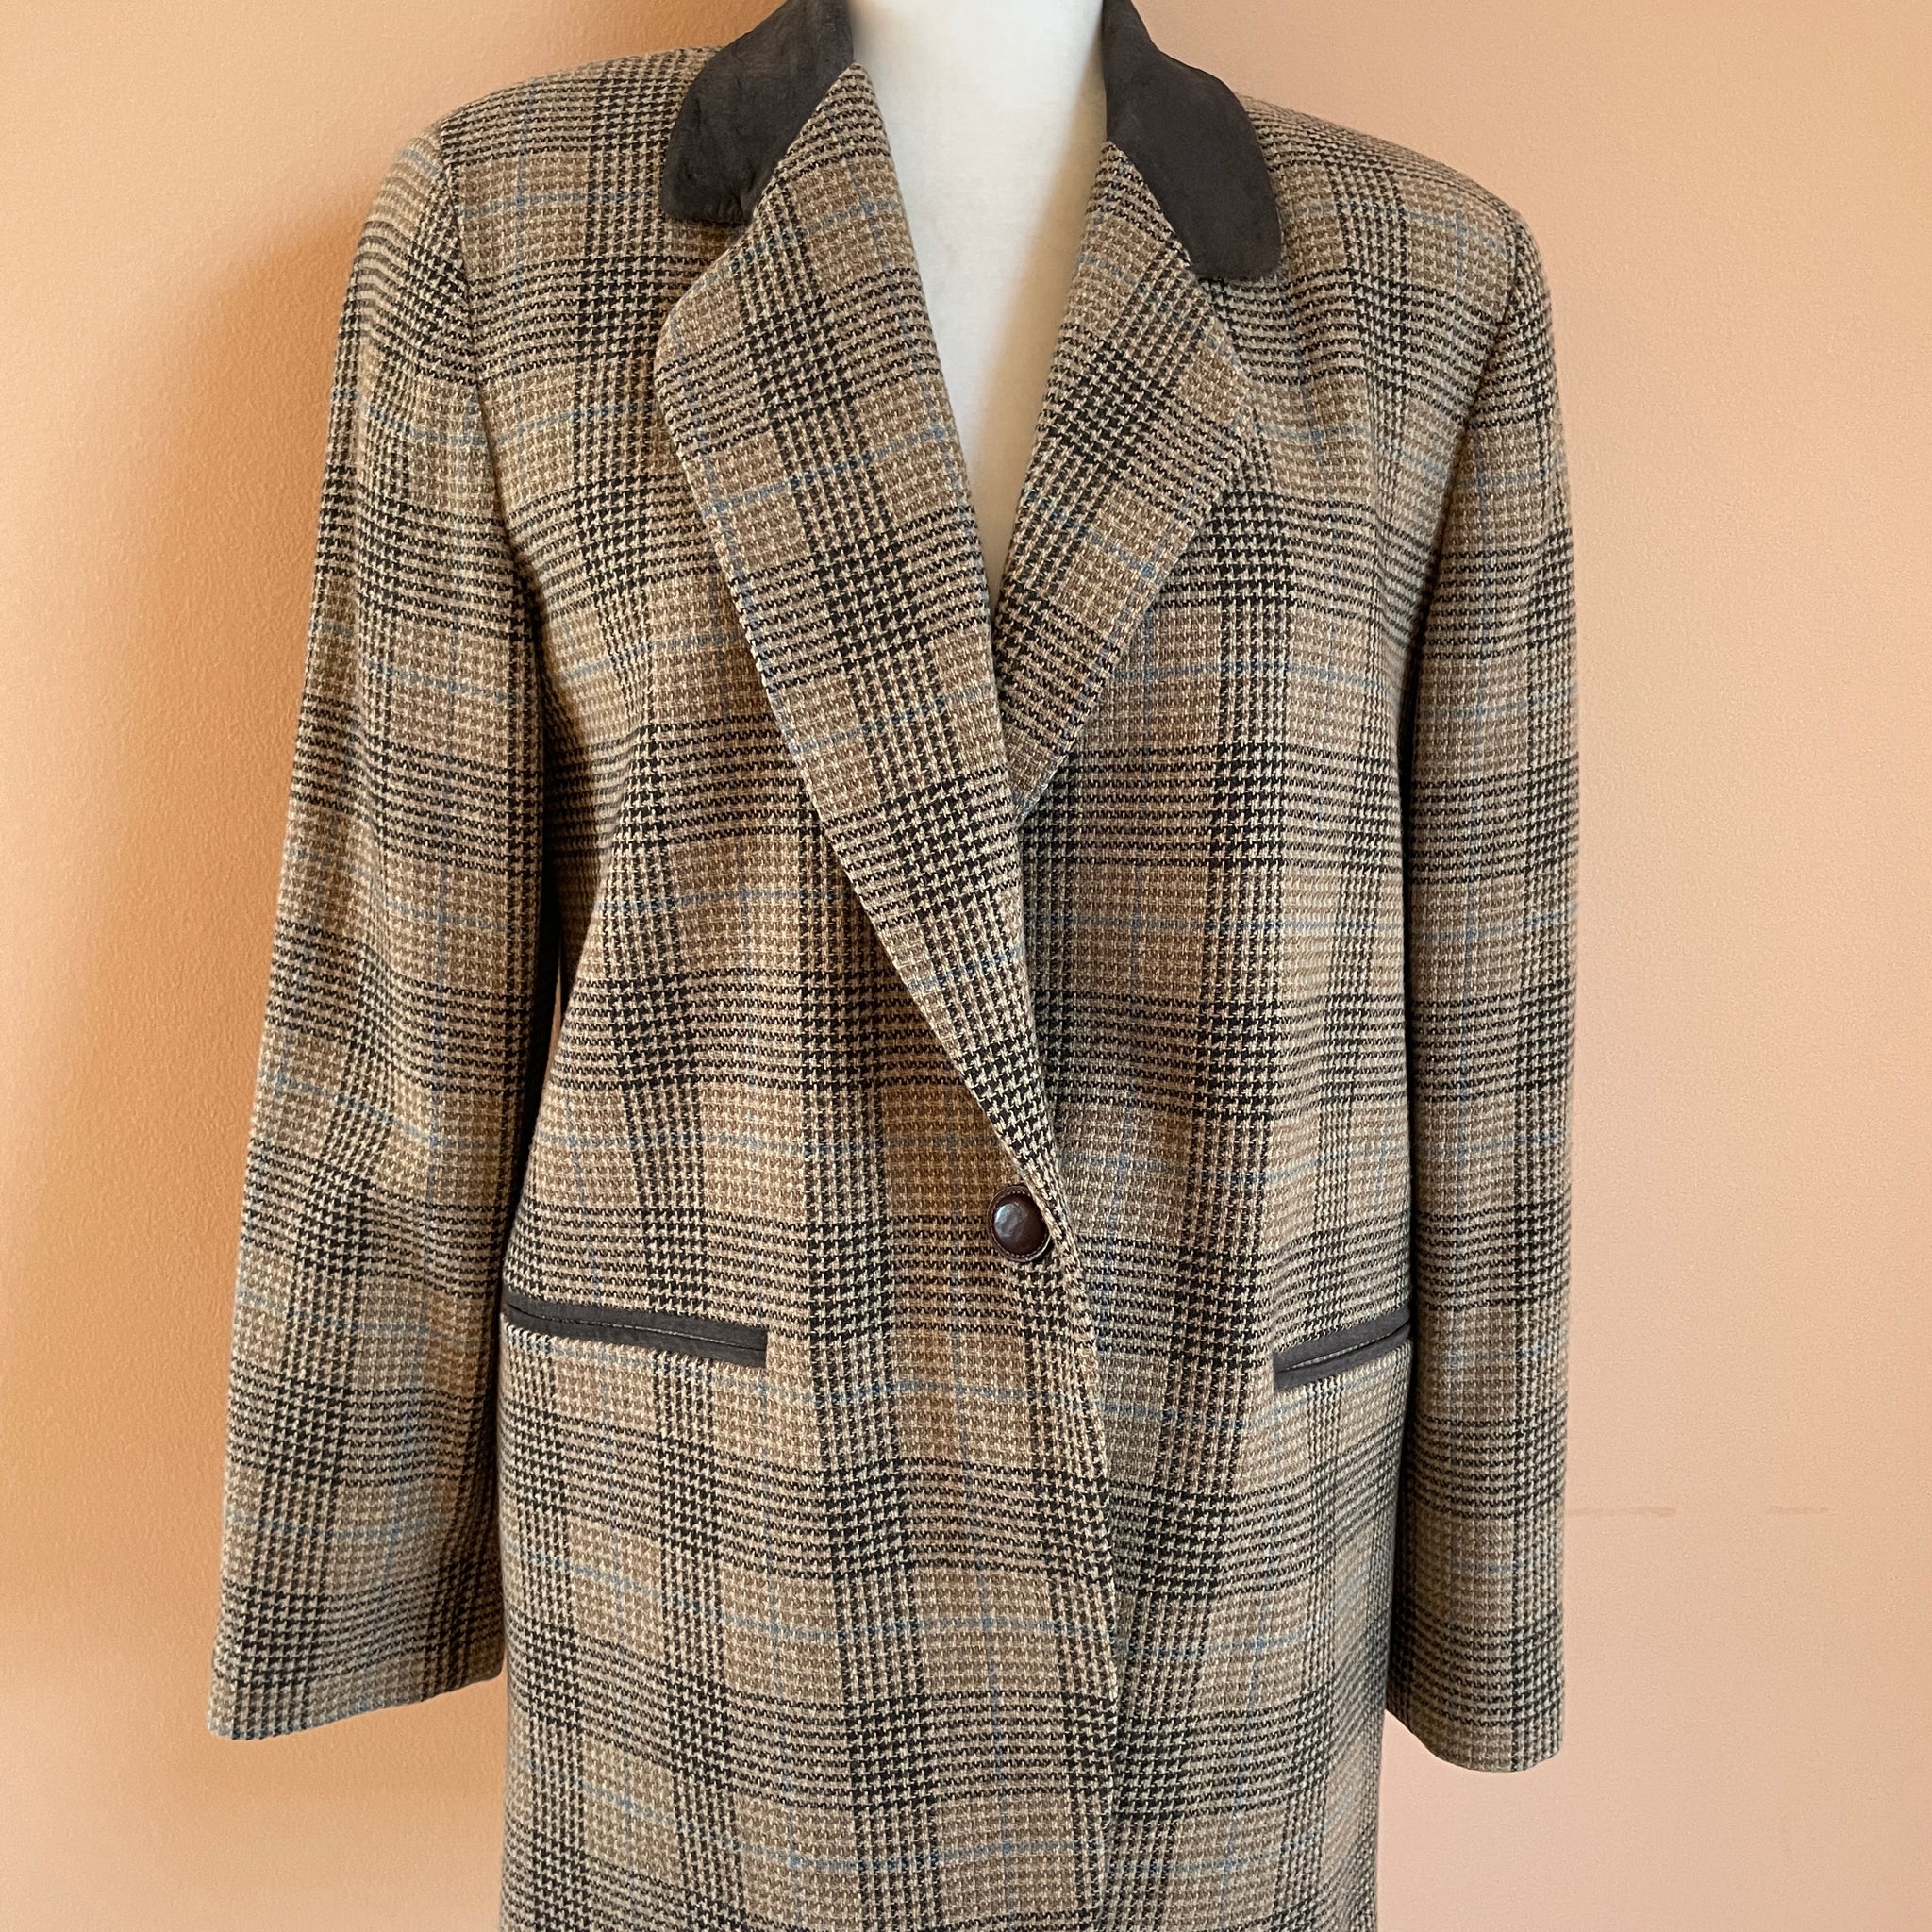 80s classic designer wool blazer jacket